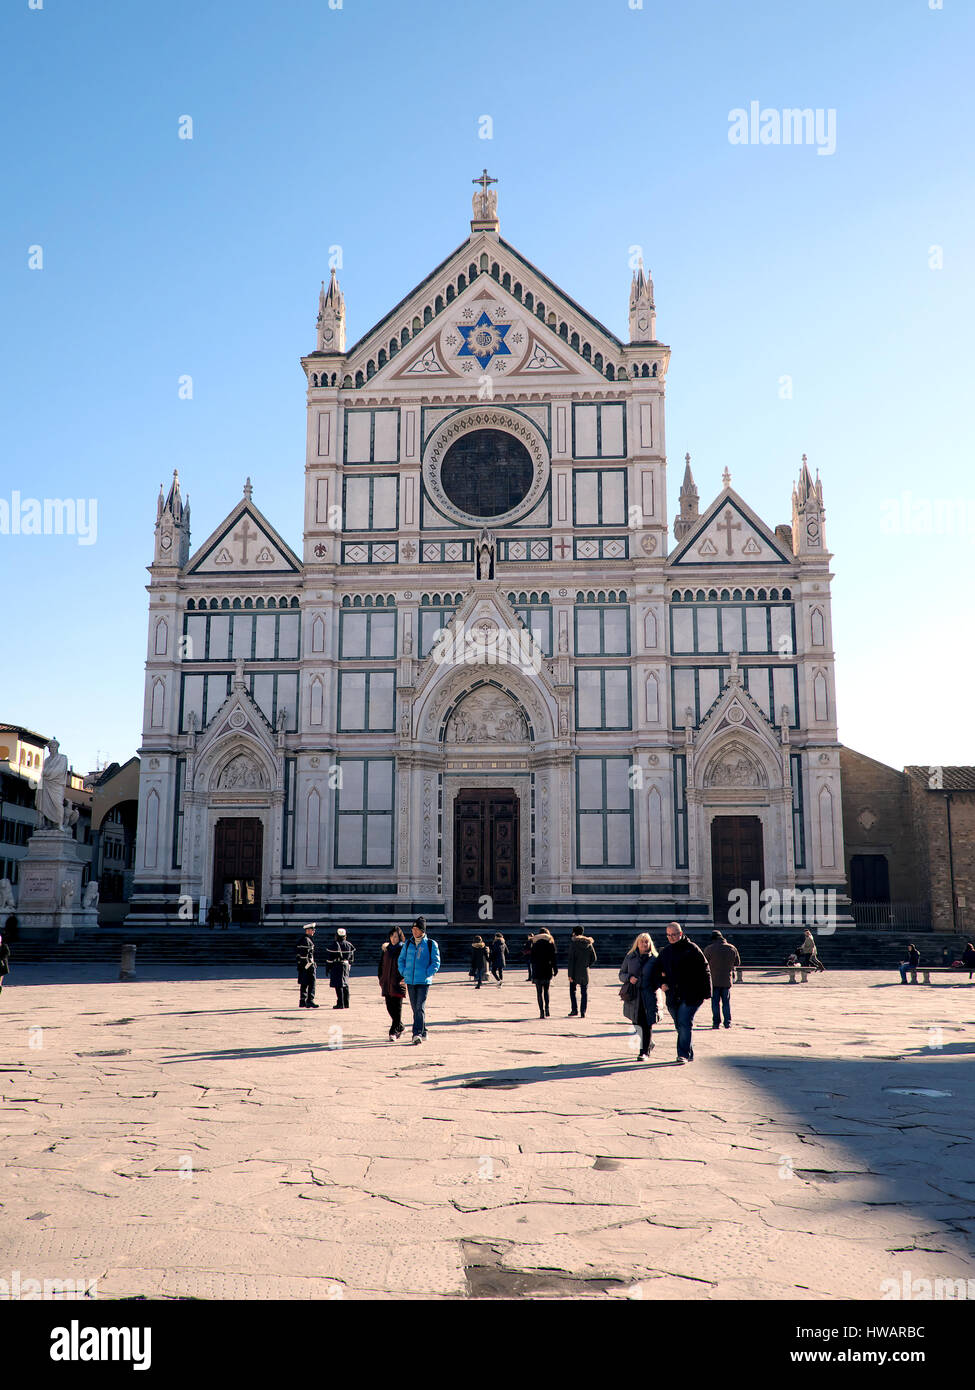 Firenze Santa Croce - Basilica Santa Croce Church Facade - Piazza Santa Croce - Florence, Tuscany, Italy, Europe Stock Photo